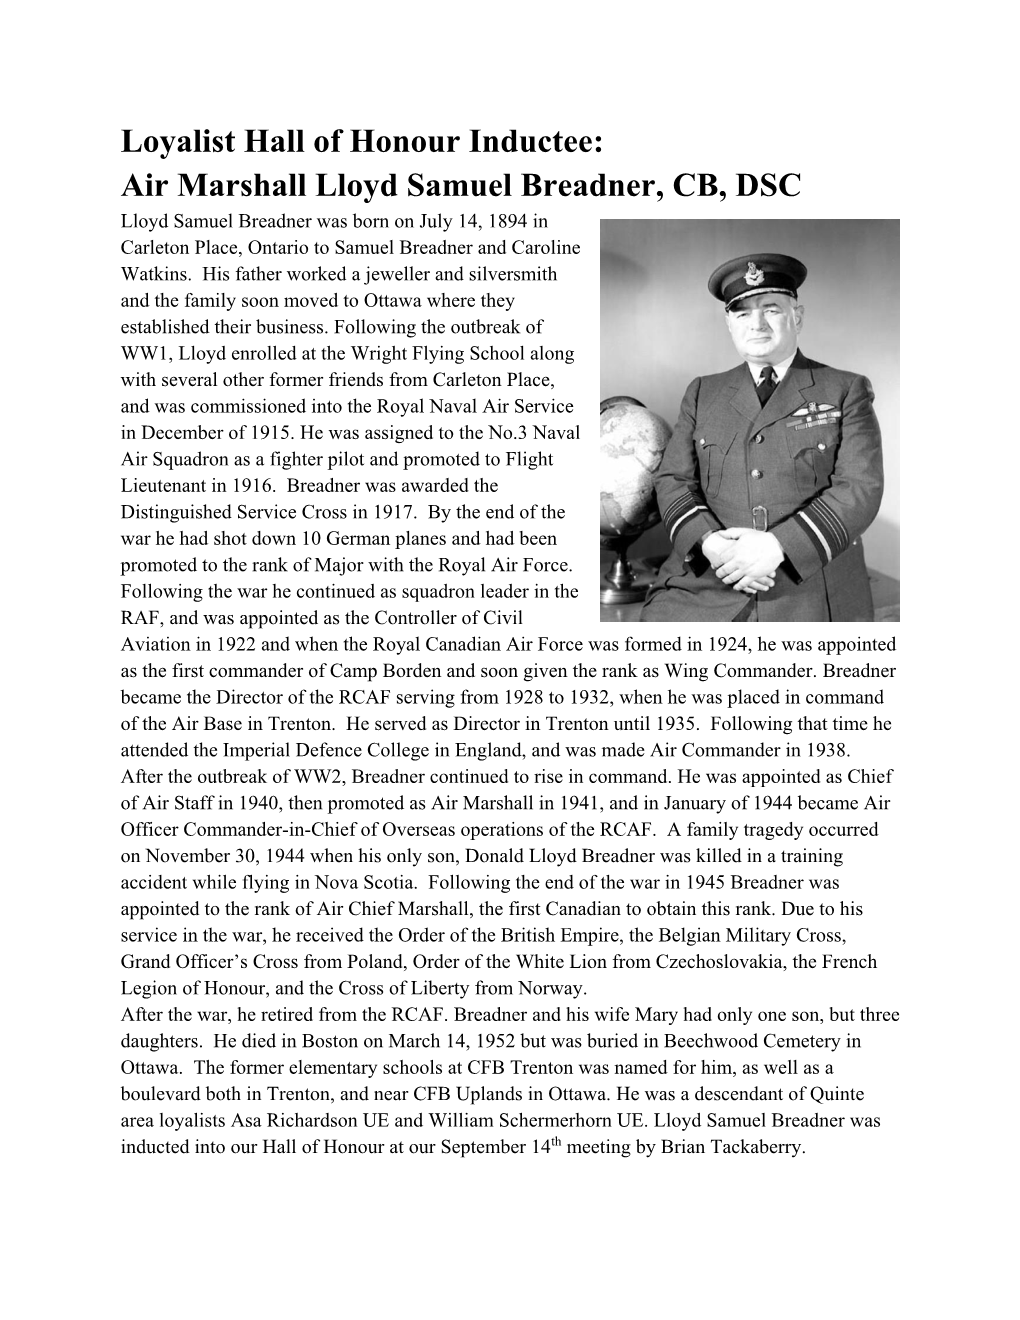 Loyalist Hall of Honour Inductee: Air Marshall Lloyd Samuel Breadner